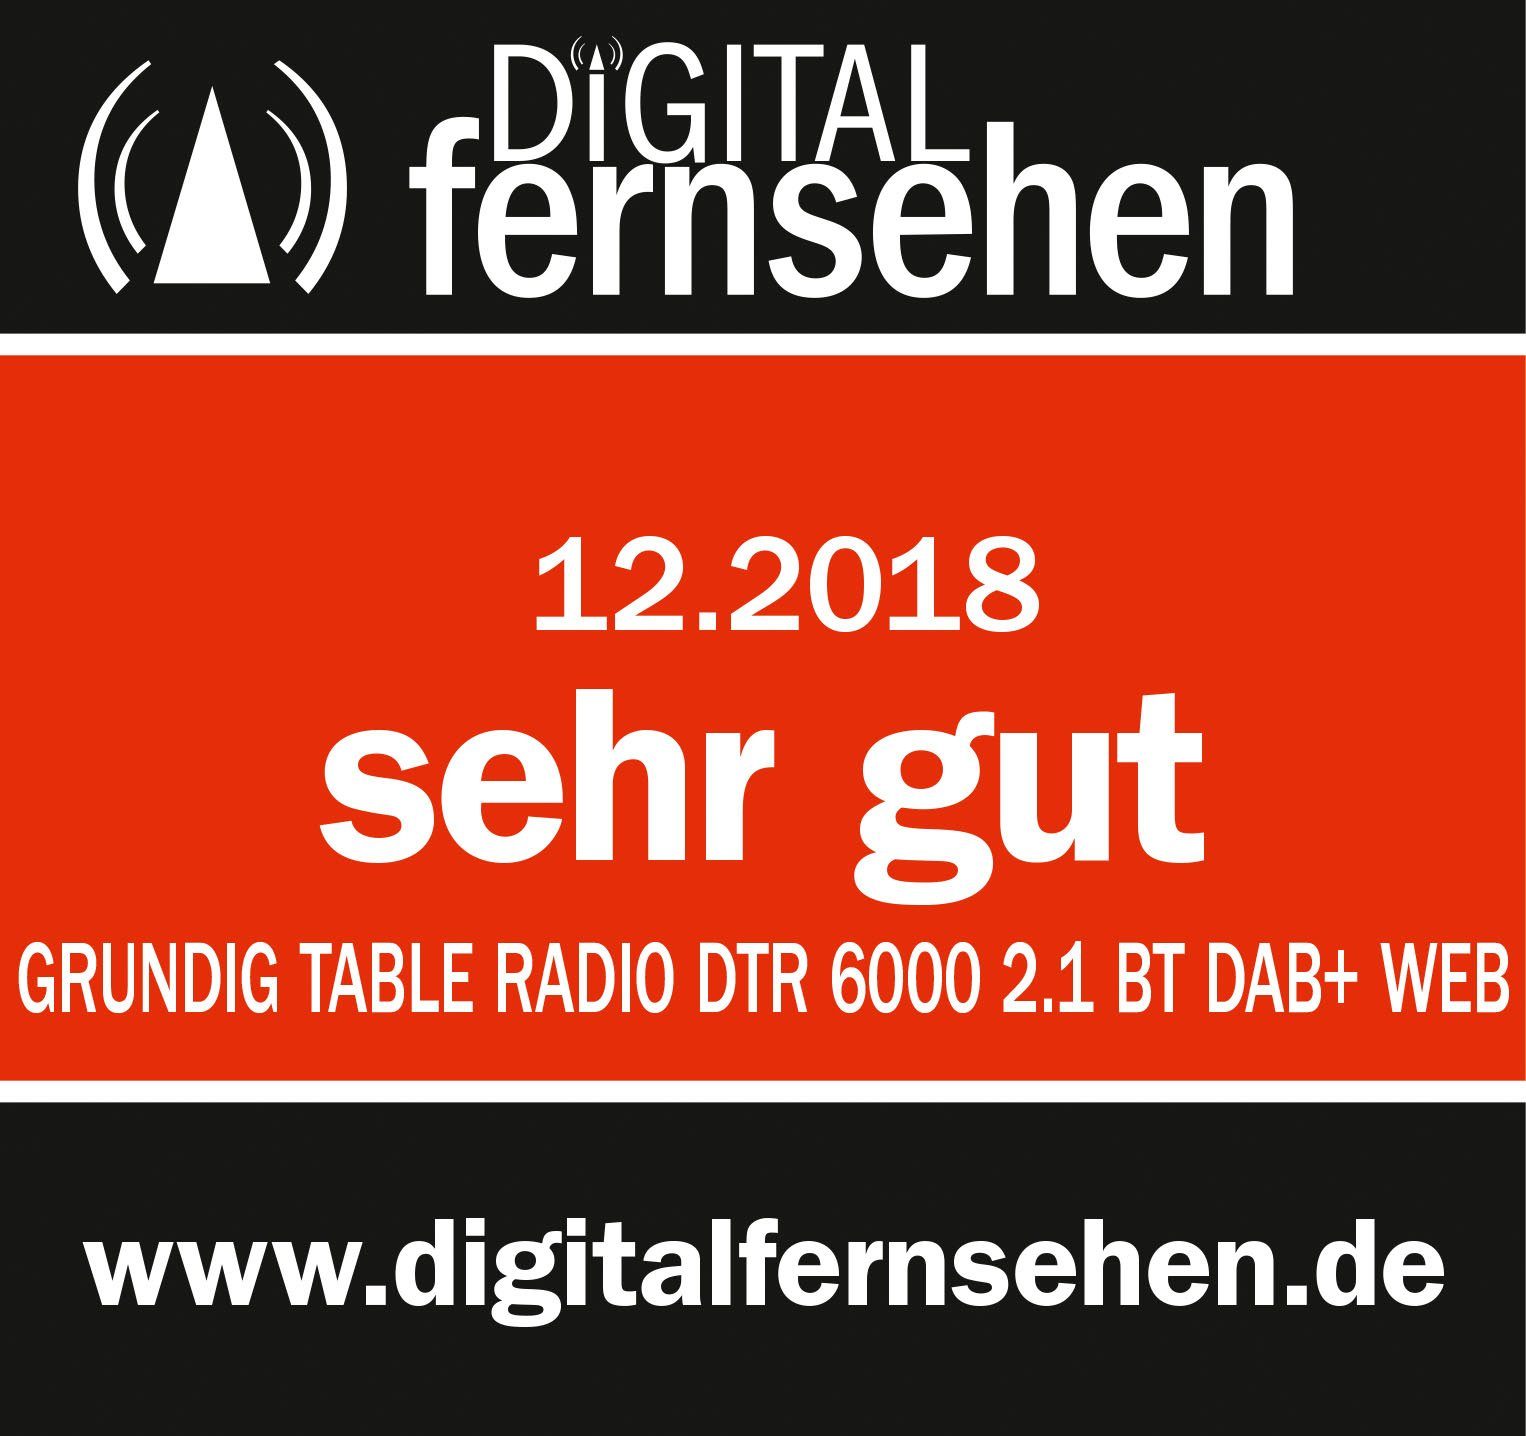 28 DTR (Digitalradio Internetradio, FM-Tuner X (DAB), Digitalradio schwarz (DAB) mit Grundig W) RDS, 6000